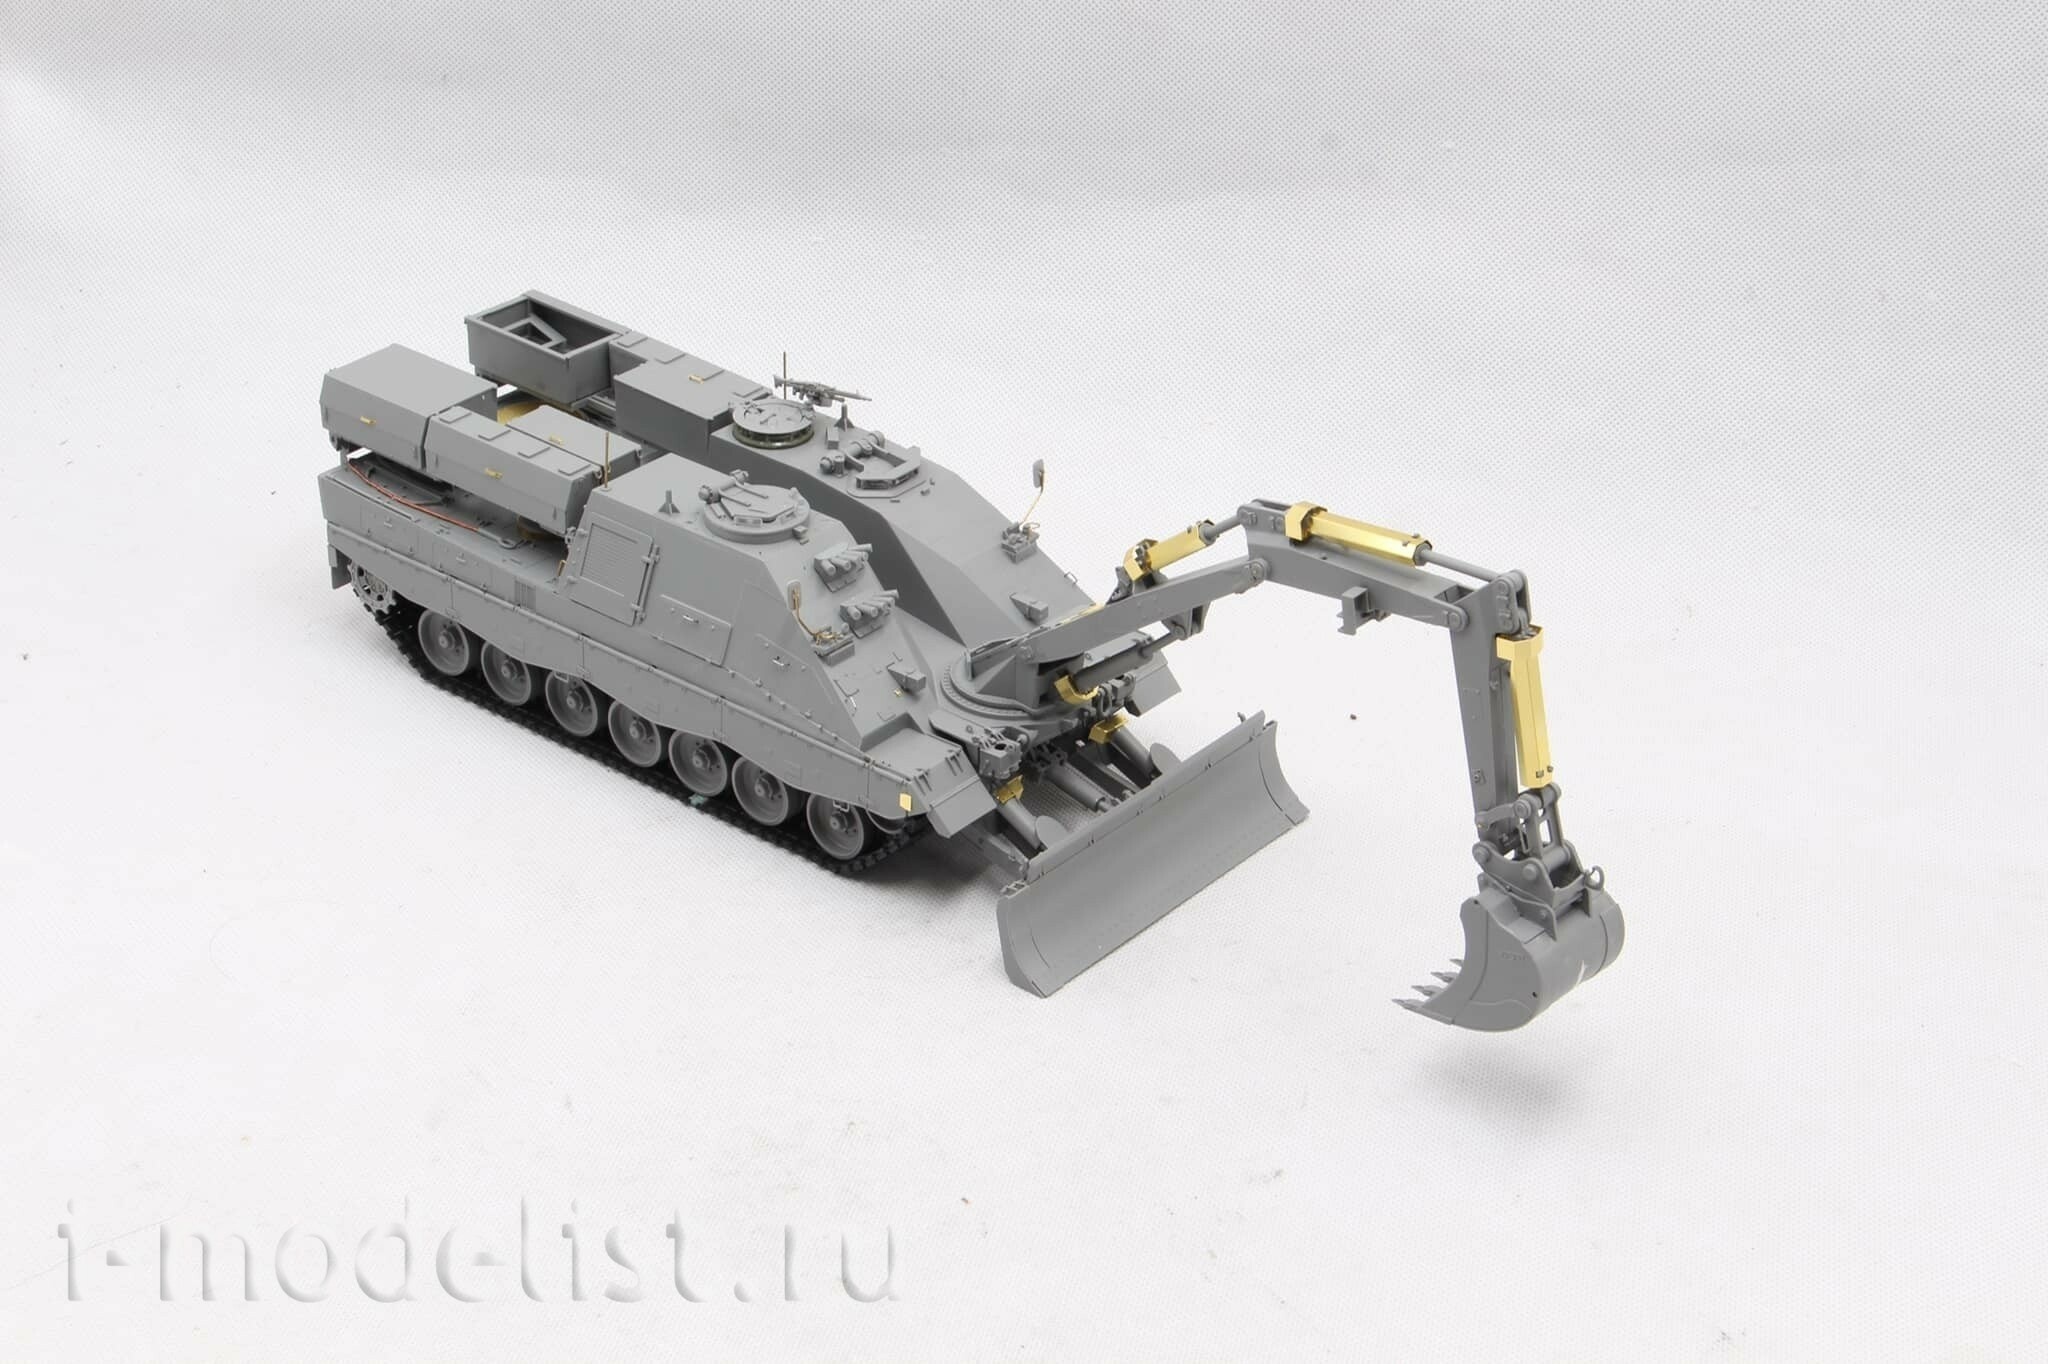 BT-011 Border Model 1/35 Armored Engineering vehicle KODIAK Swiss series \ German Demonstrator EV-3 Pionierpanzer (2in1)